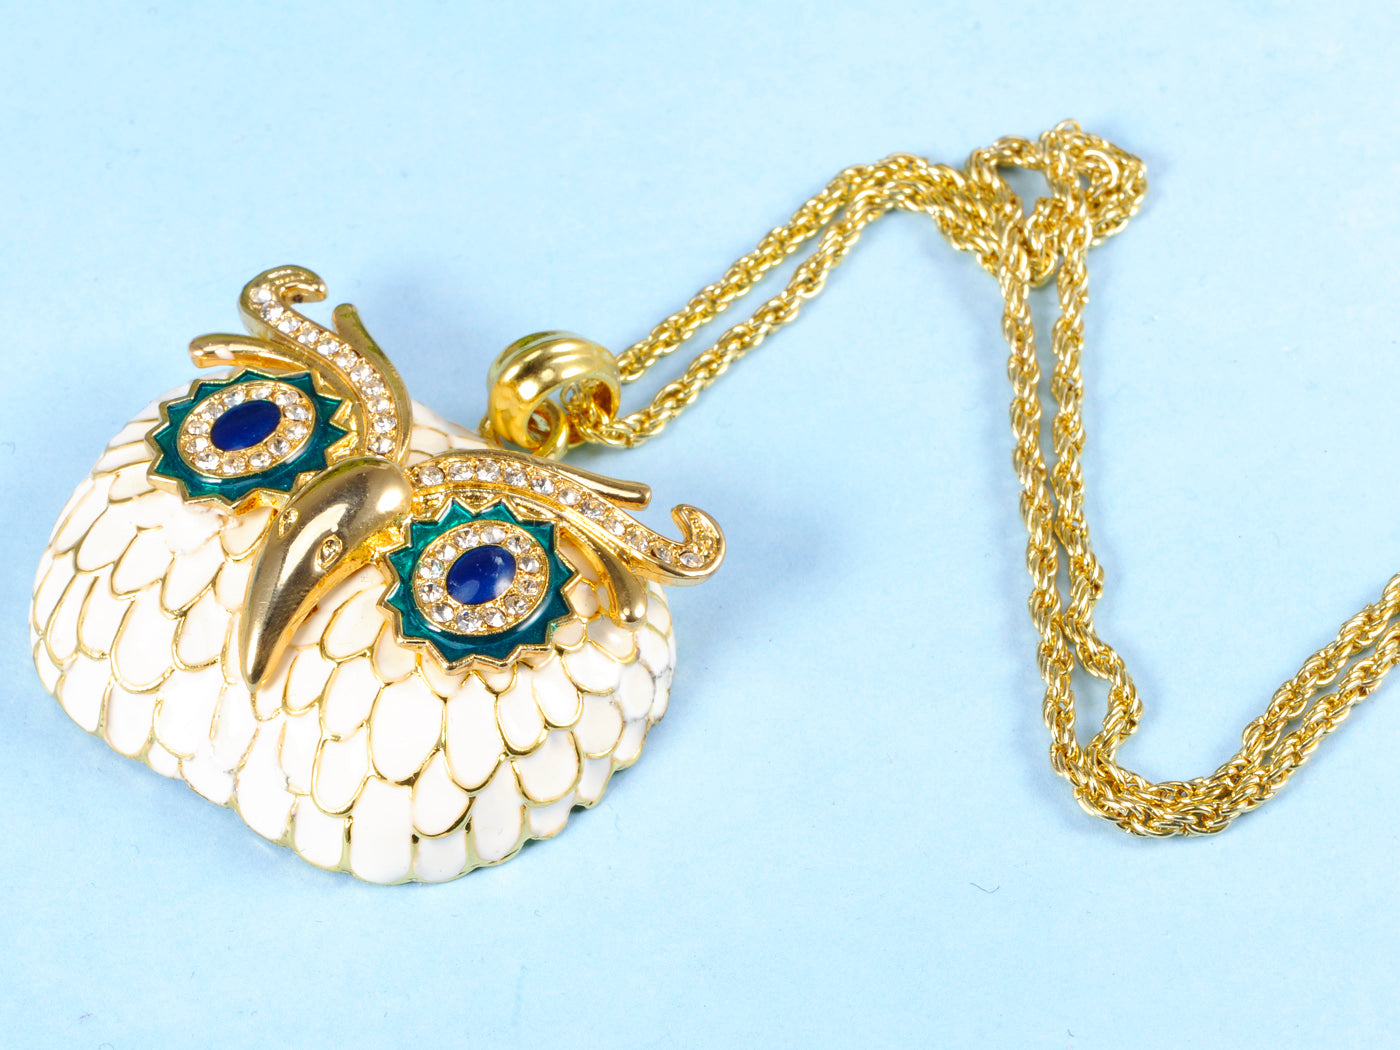 Rhine Enamel Painted Owl Head Pendant Necklace